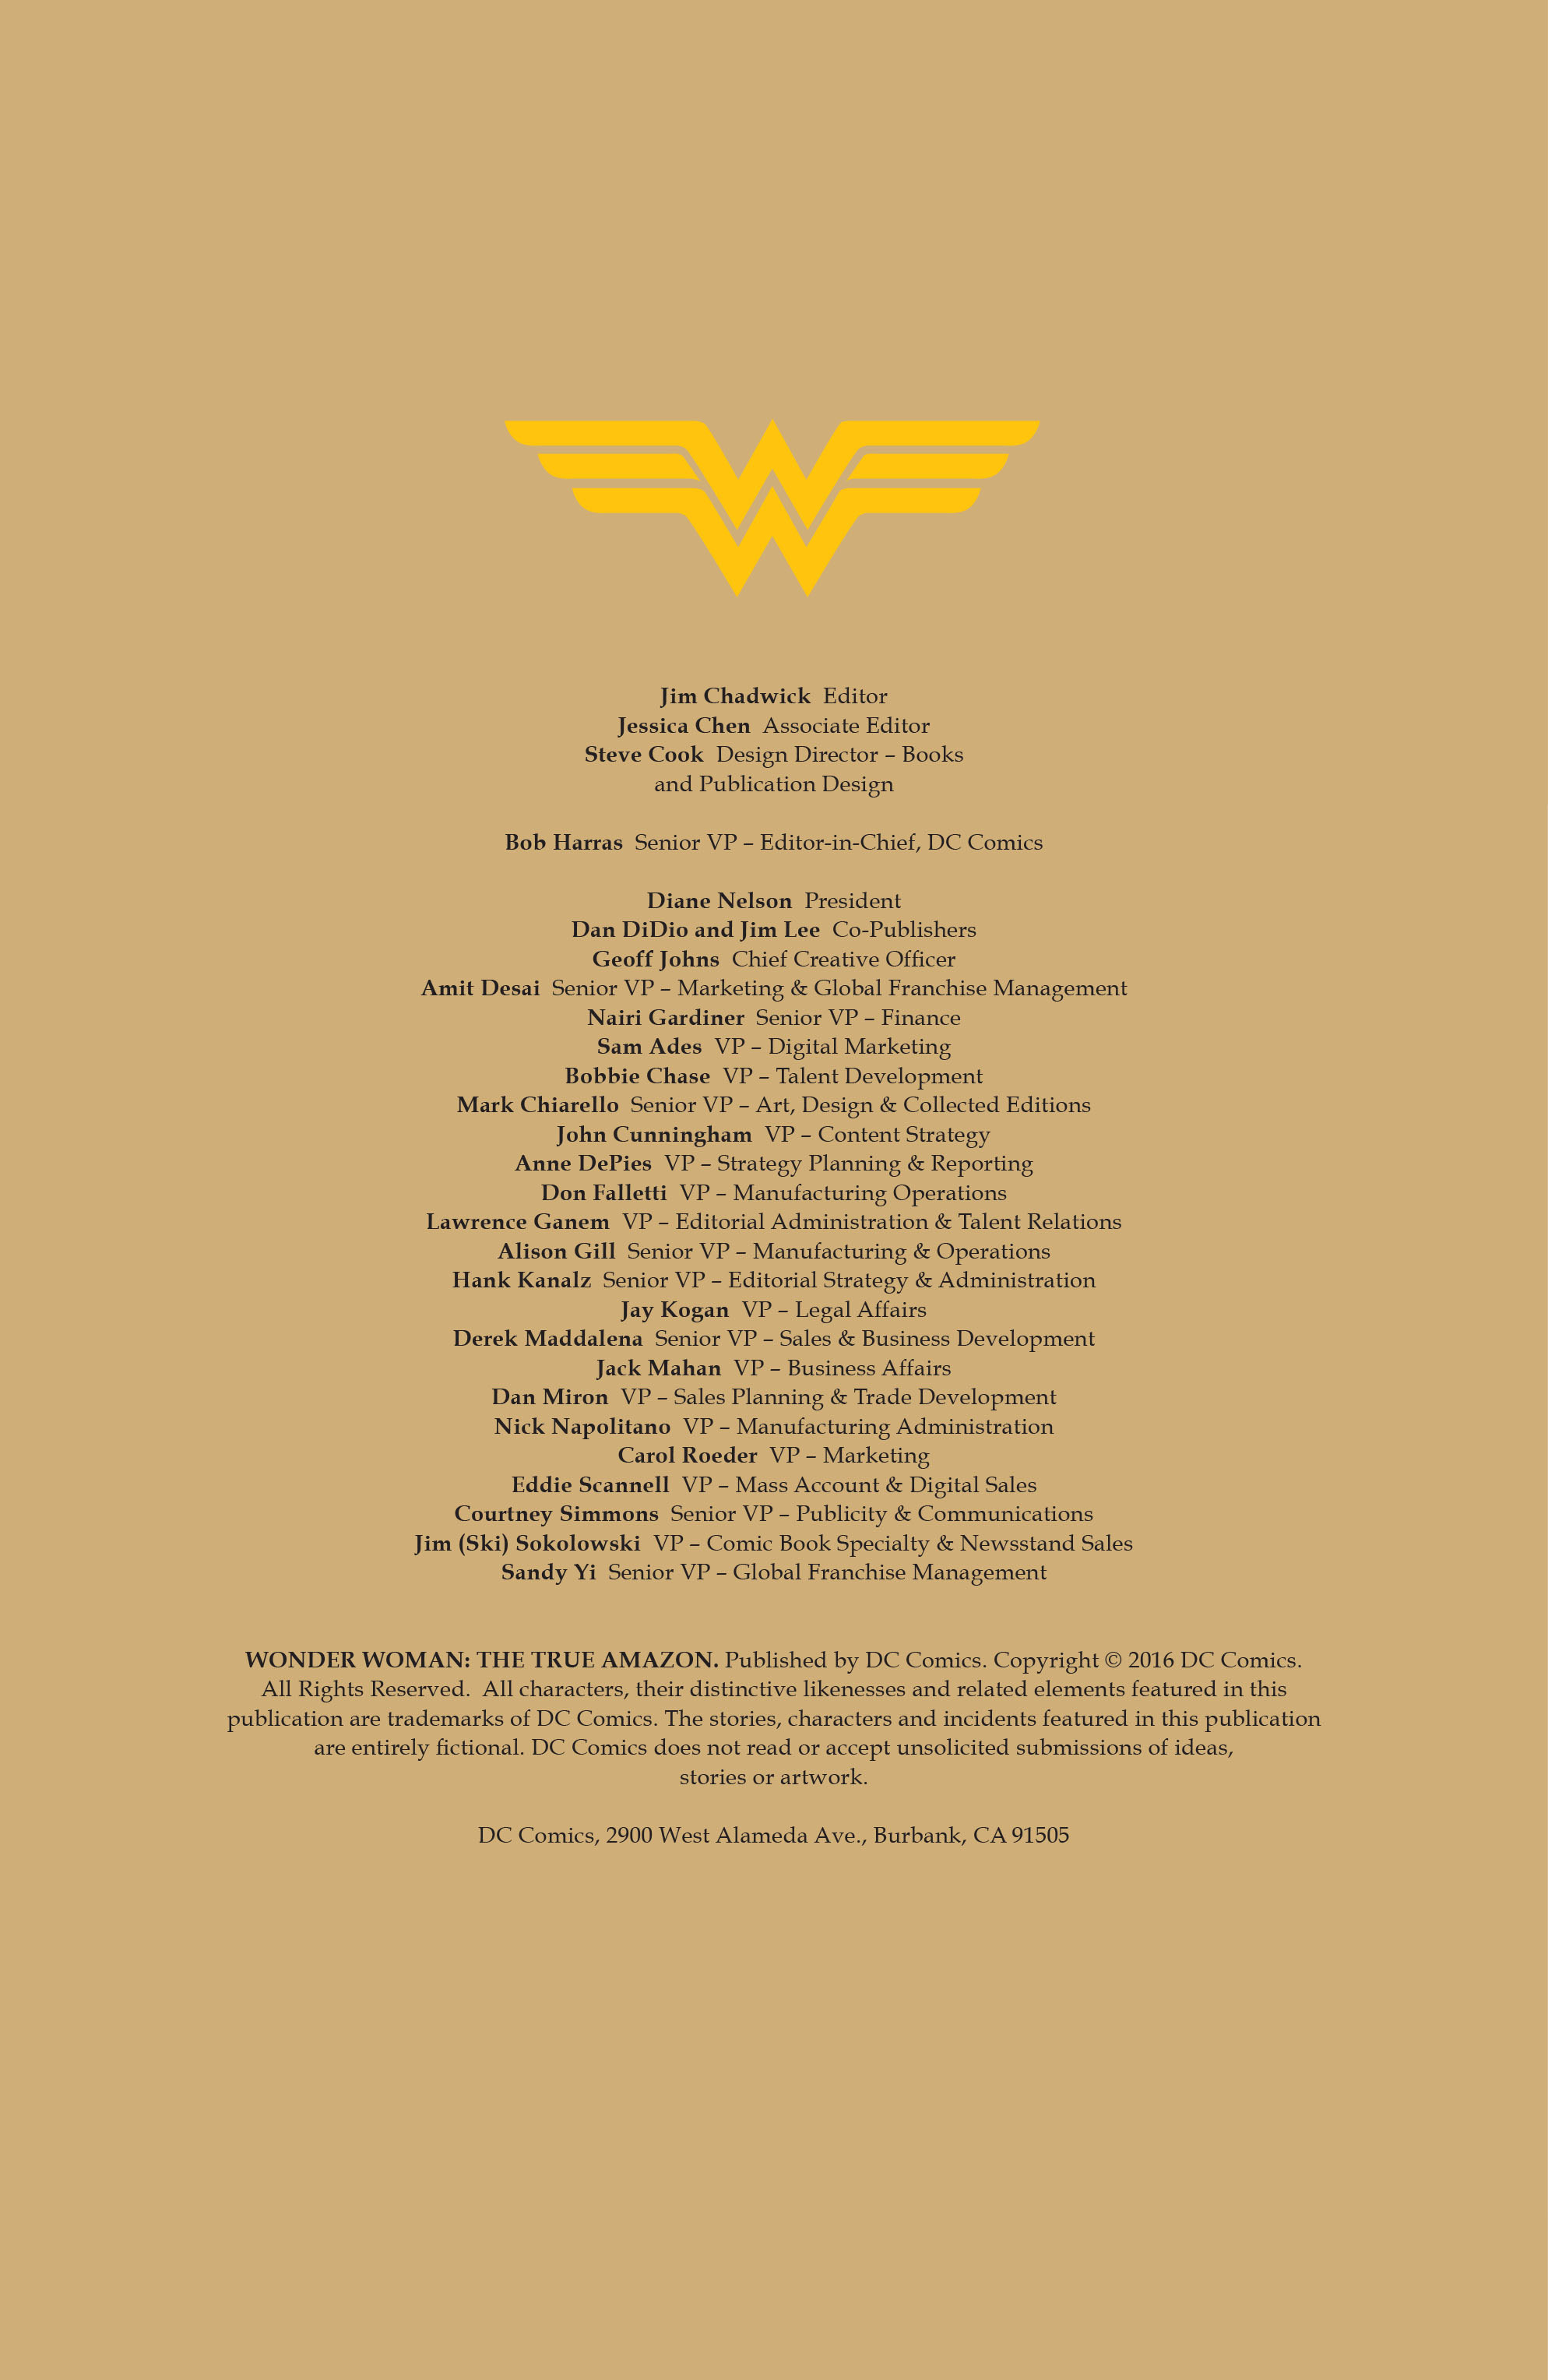 Read online Wonder Woman: The True Amazon comic -  Issue # Full - 4